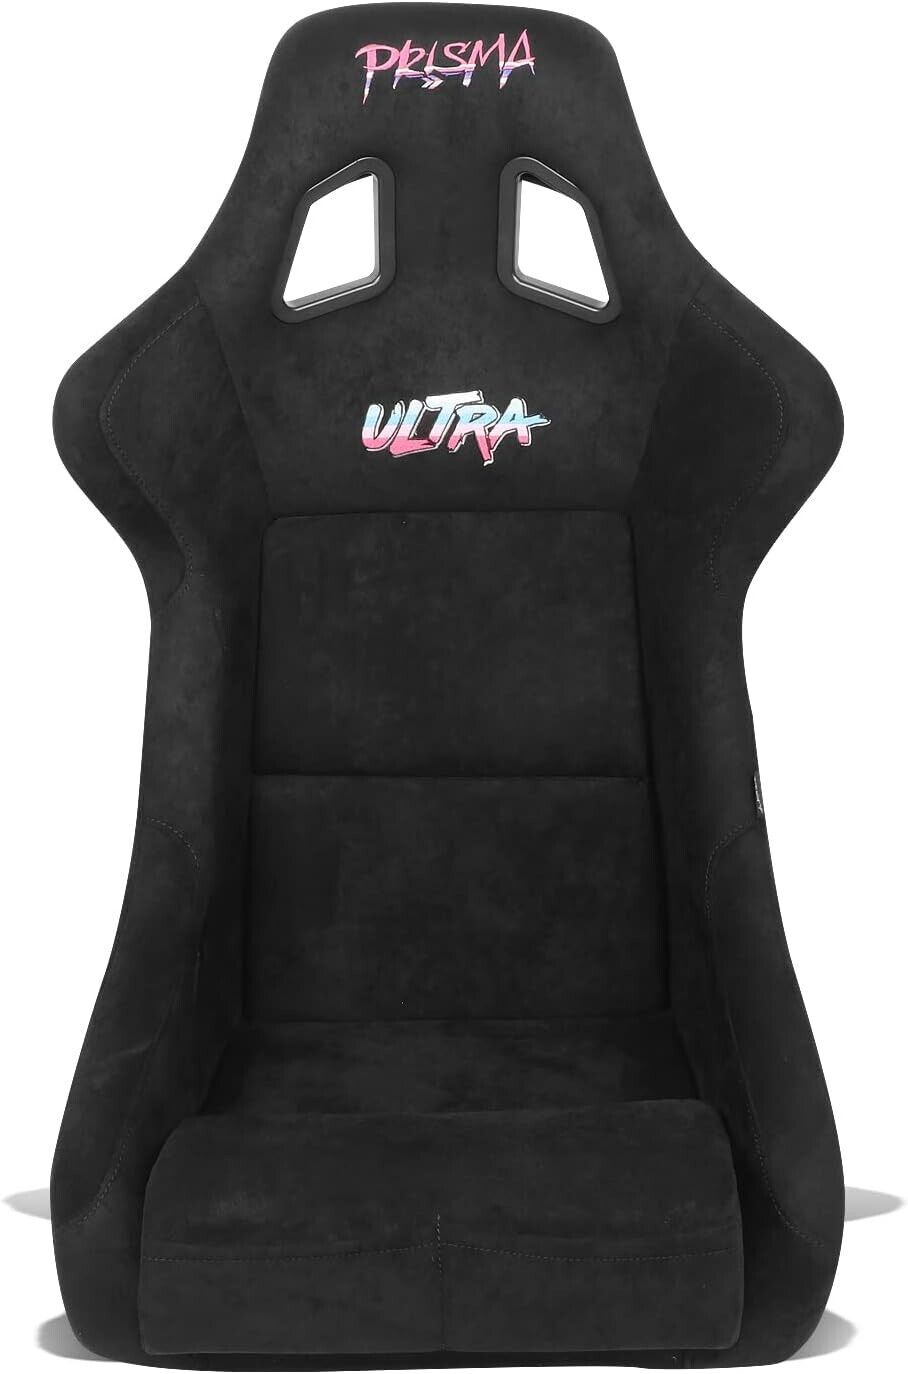 UK STOCK NRG PRISMA ULTRA x1 Universal Sports Bucket Seat Black Alcantara Fibreglass Back Metal Flake LARGE